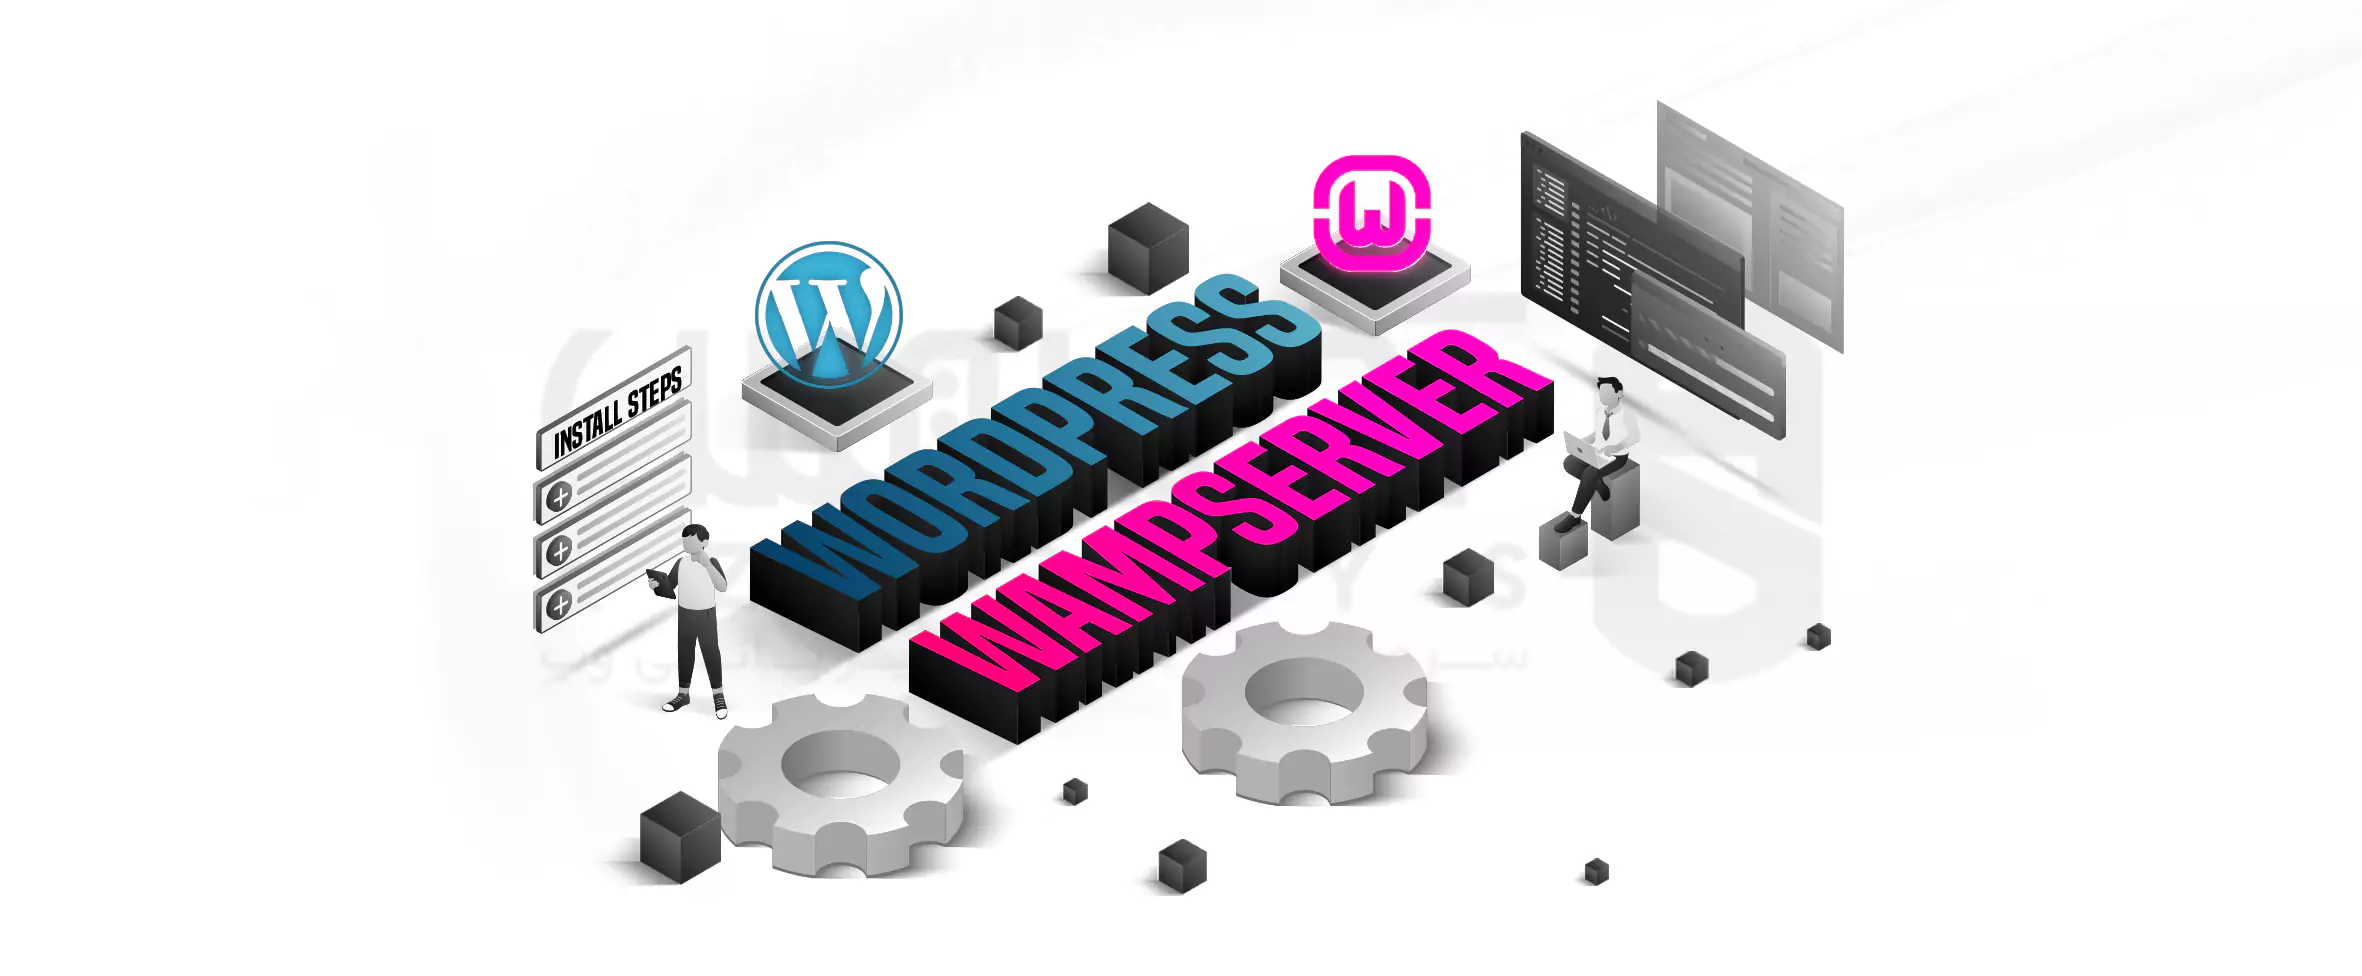 How to install WordPress on Wampserver